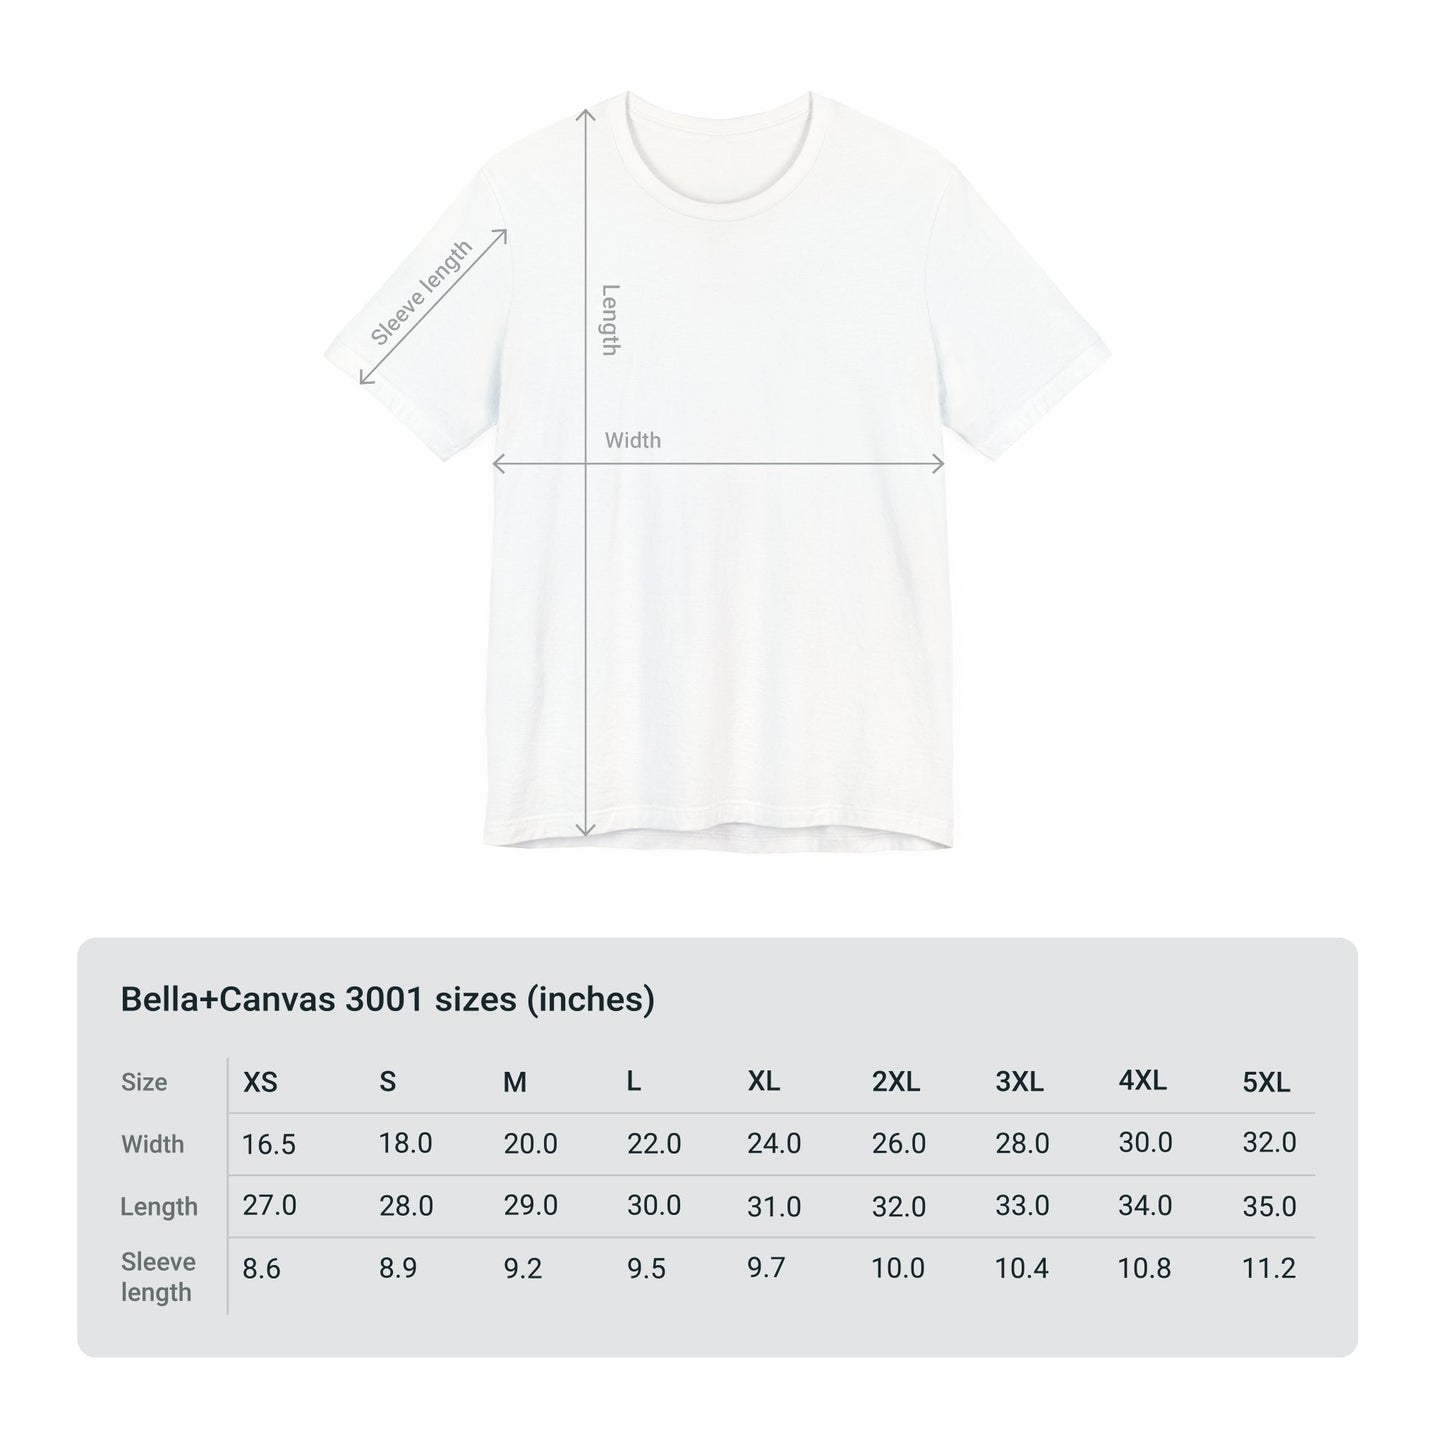 Sunset Bat Short Sleeve Tee ShirtT - ShirtVTZdesignsVintage WhiteXSCottonCrew neckDTG